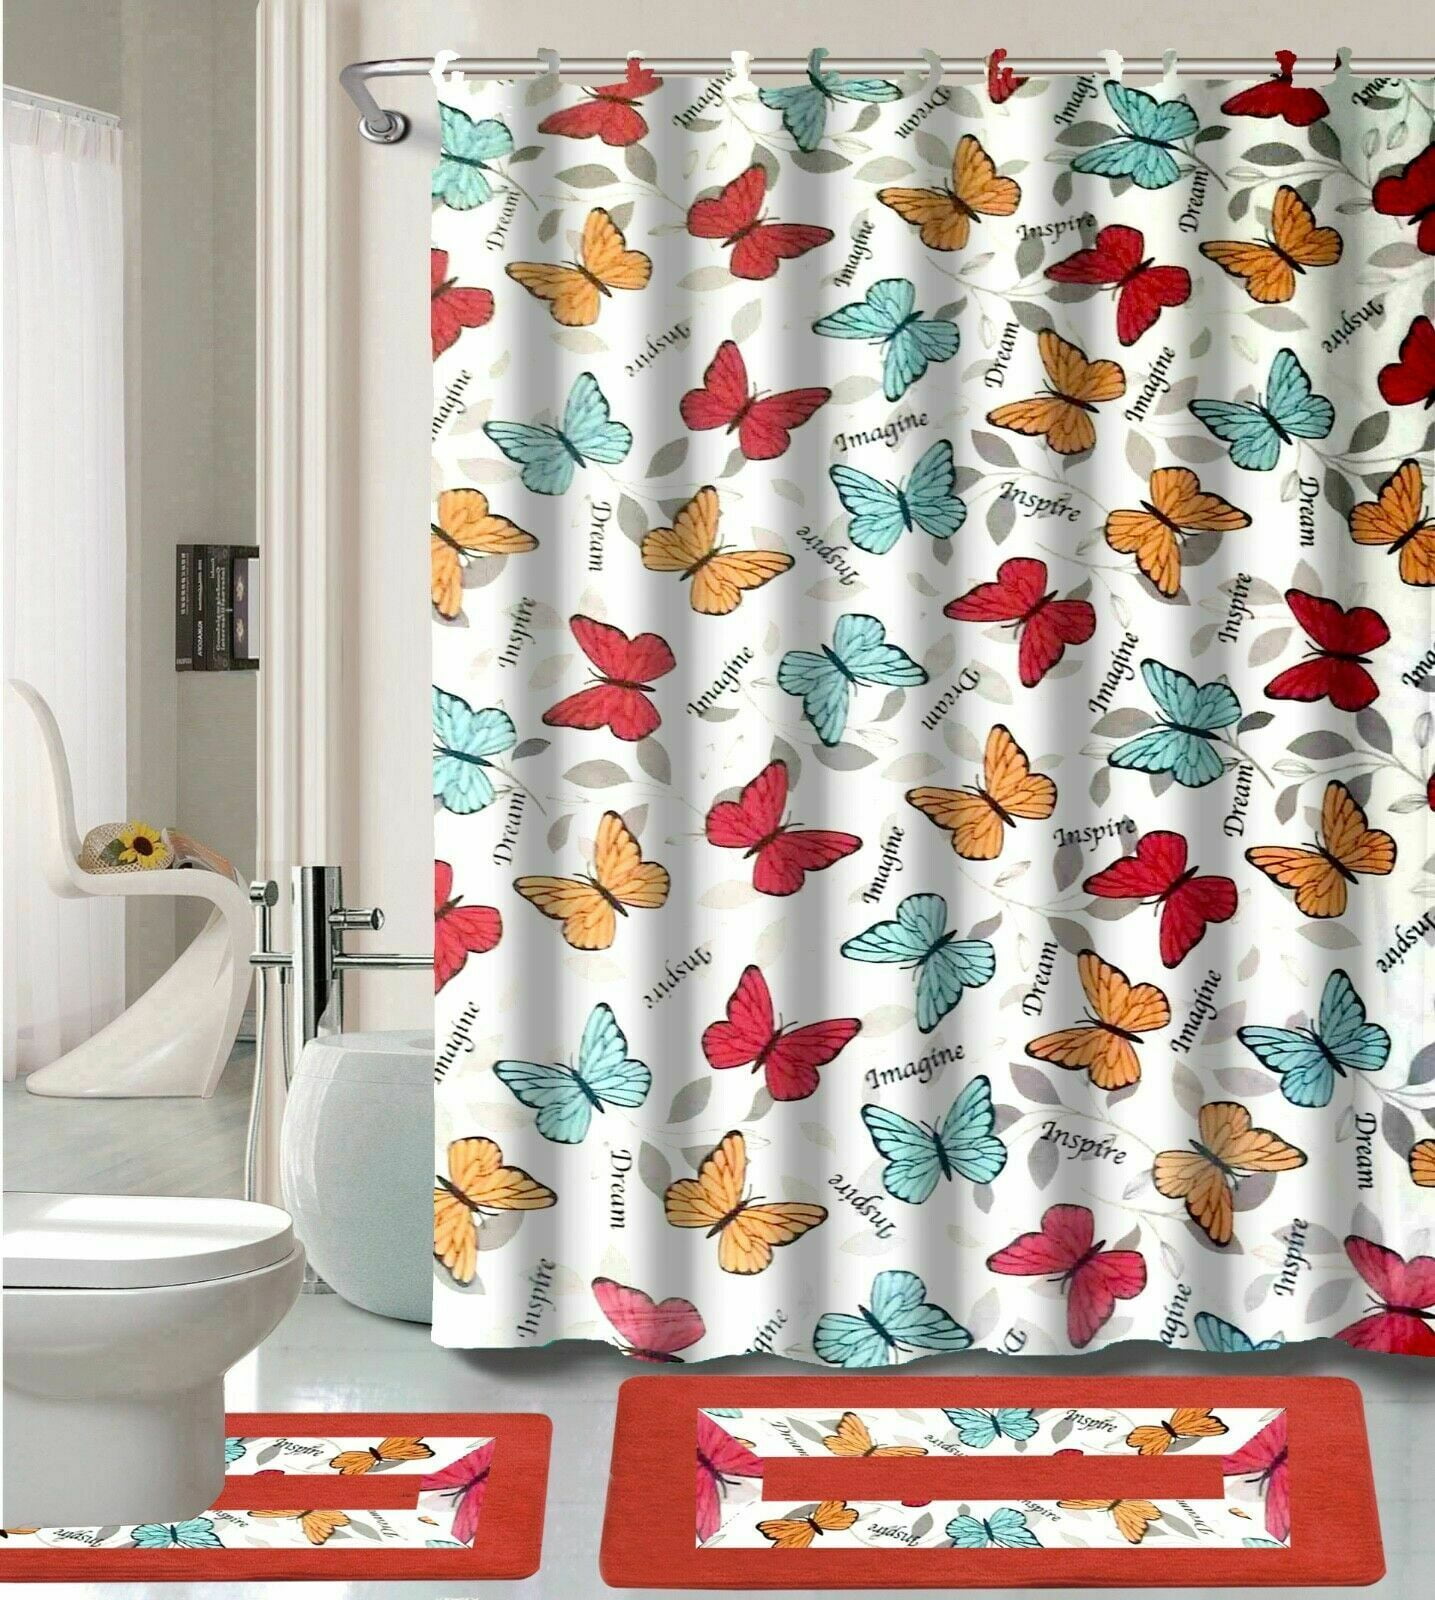 Details about   Creative Pop Rock Singer Bathroom Waterproof Fabric Shower Curtain & 12 Hooks 